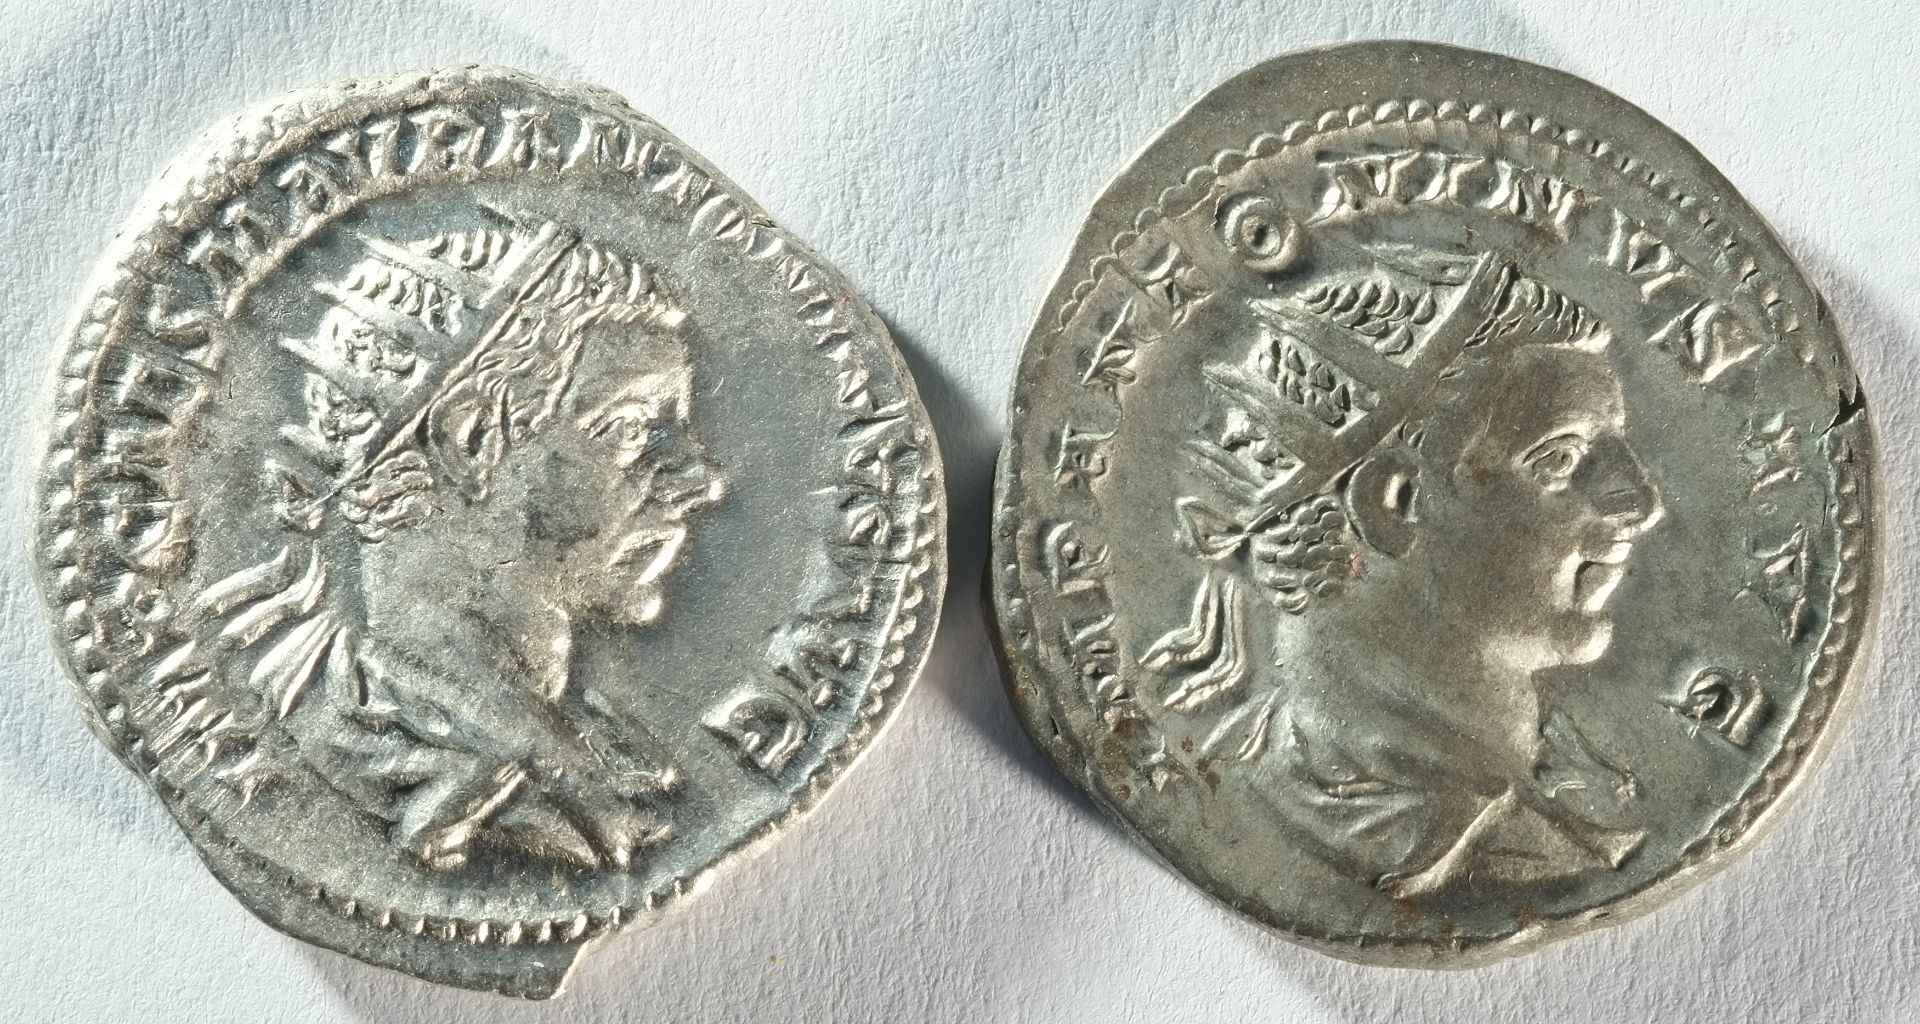 2x Elagabalus (218 - 222 CE) silver antoninianii